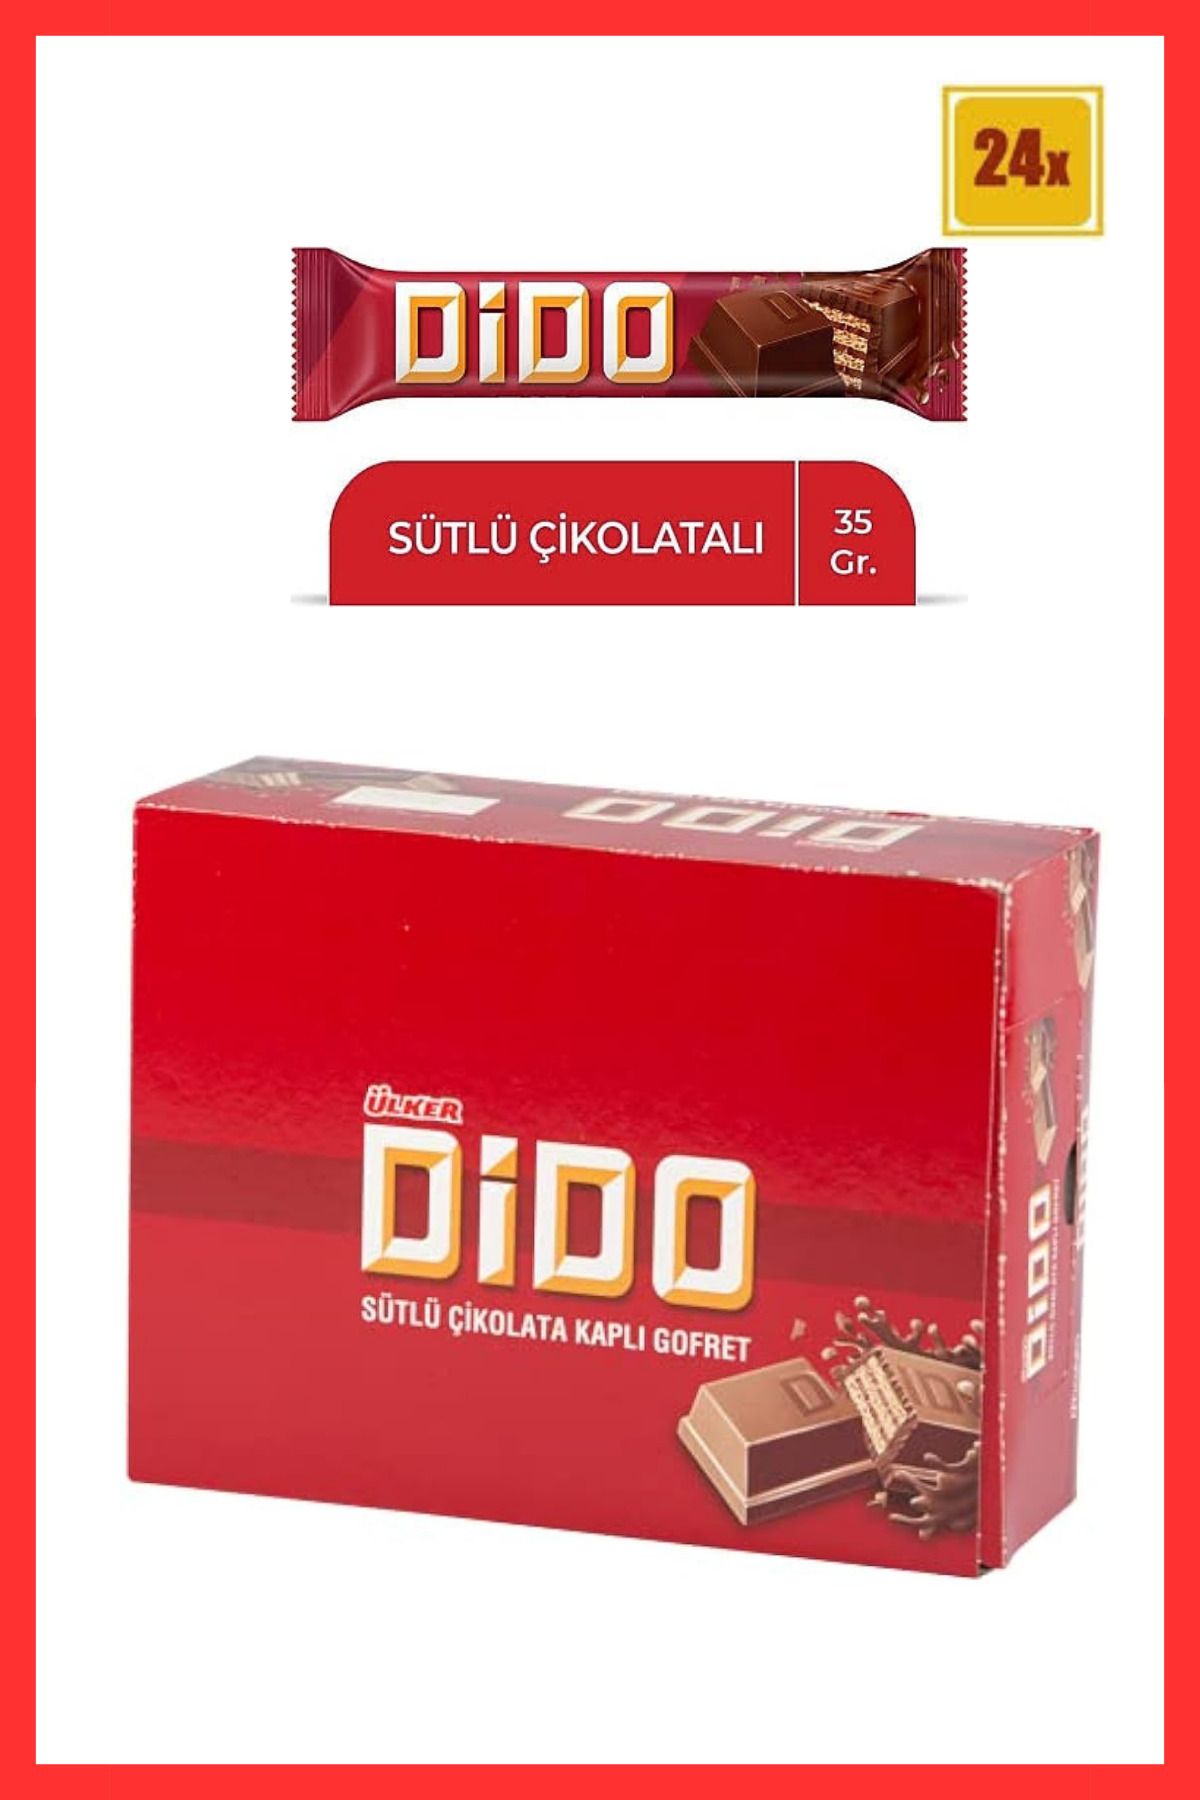 Ülker Dido Çikolatalı Gofret 24 Adet 35GR (1 Kutu)